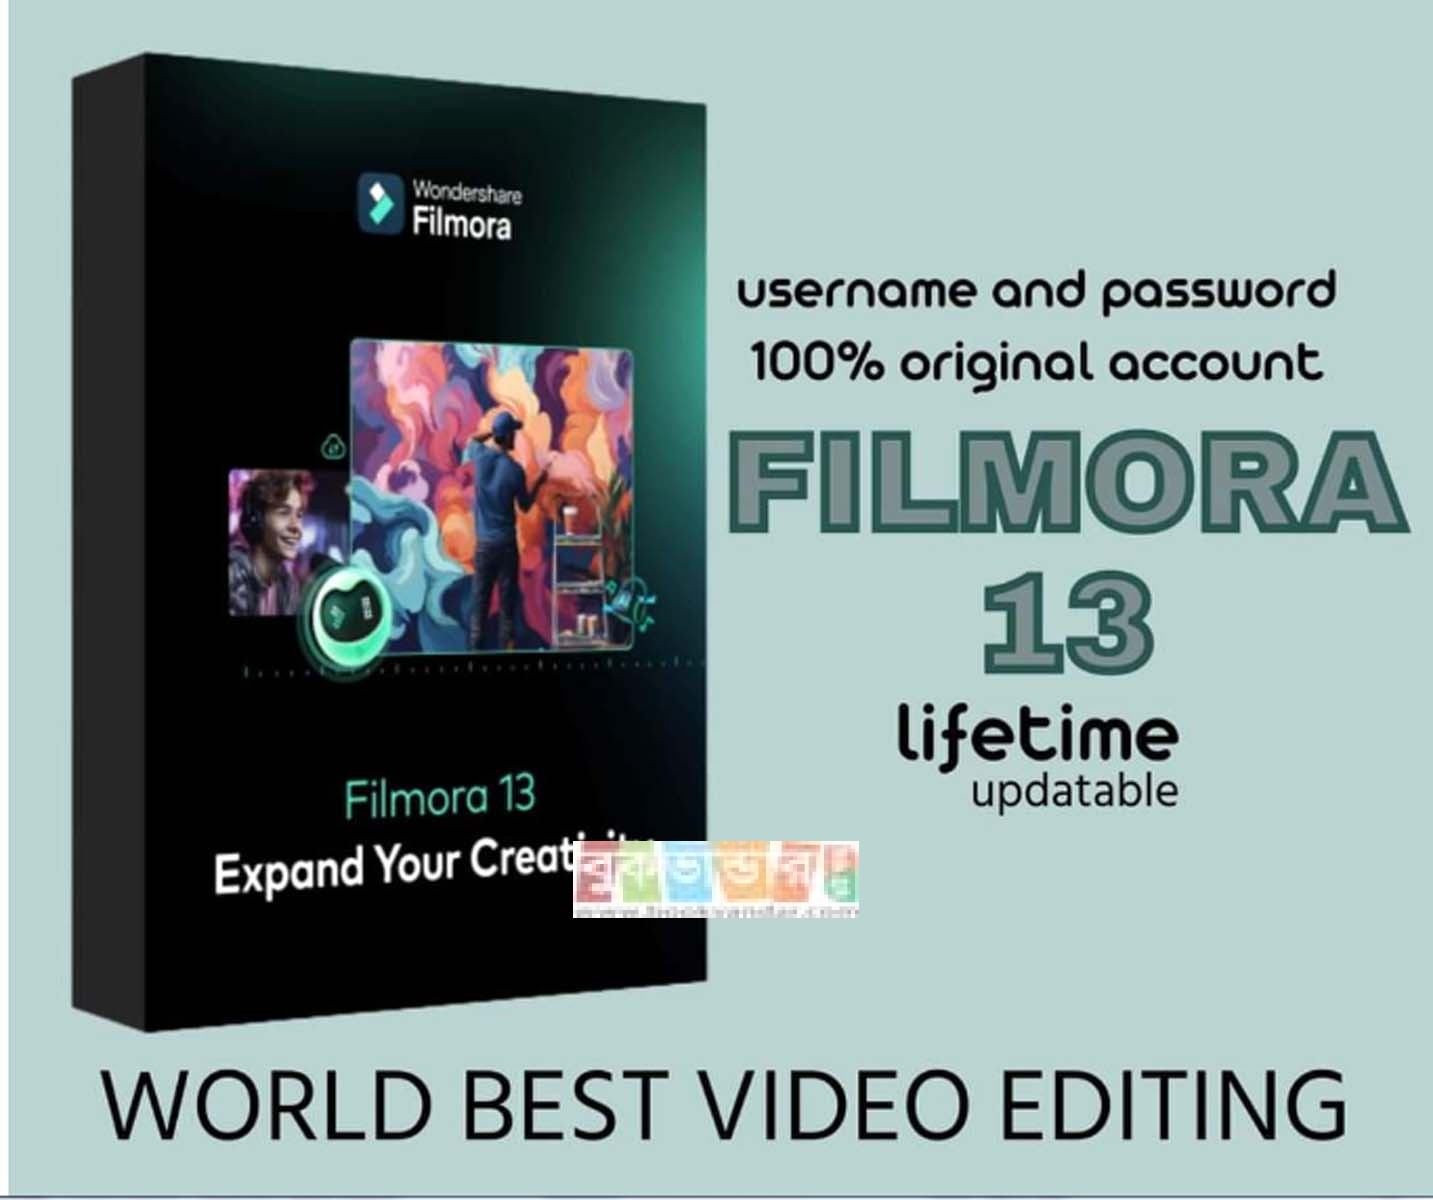 Wondershare Filmora 13 Video Editing Software